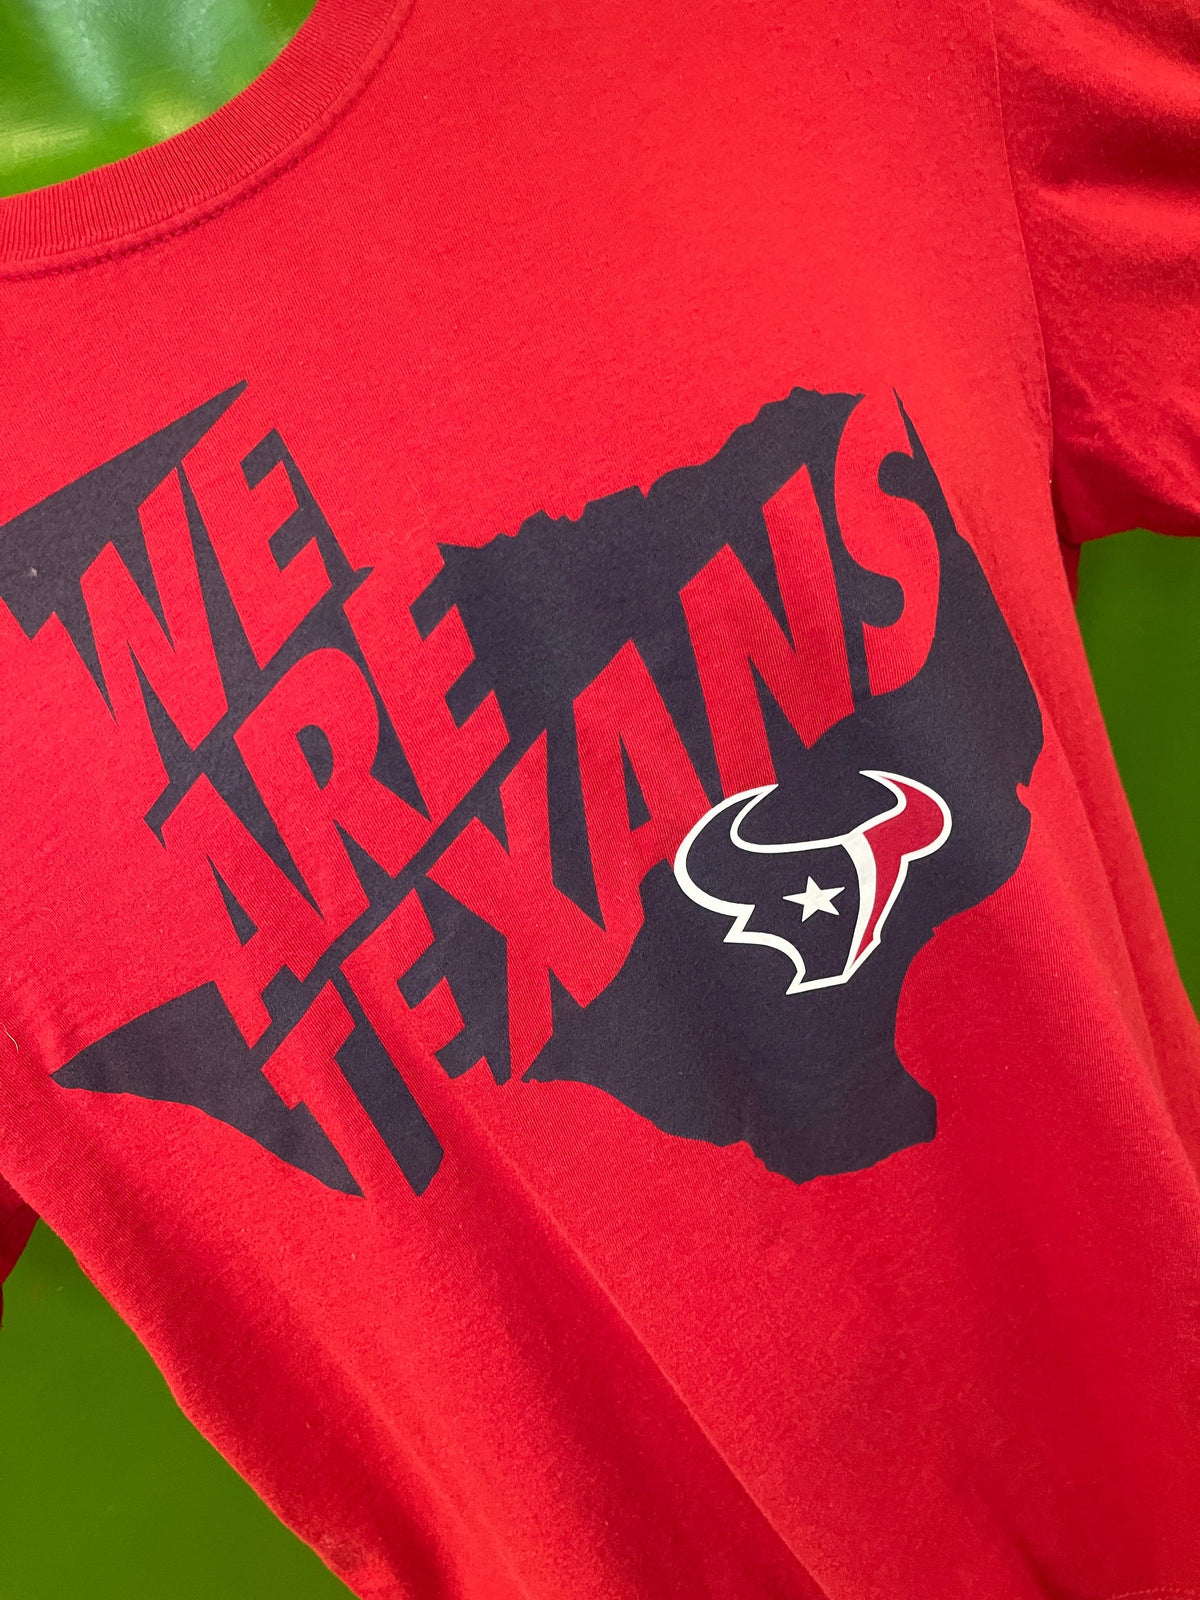 NFL Houston Texans Red "We are Texans" 100% Cotton T-Shirt Men's X-Large